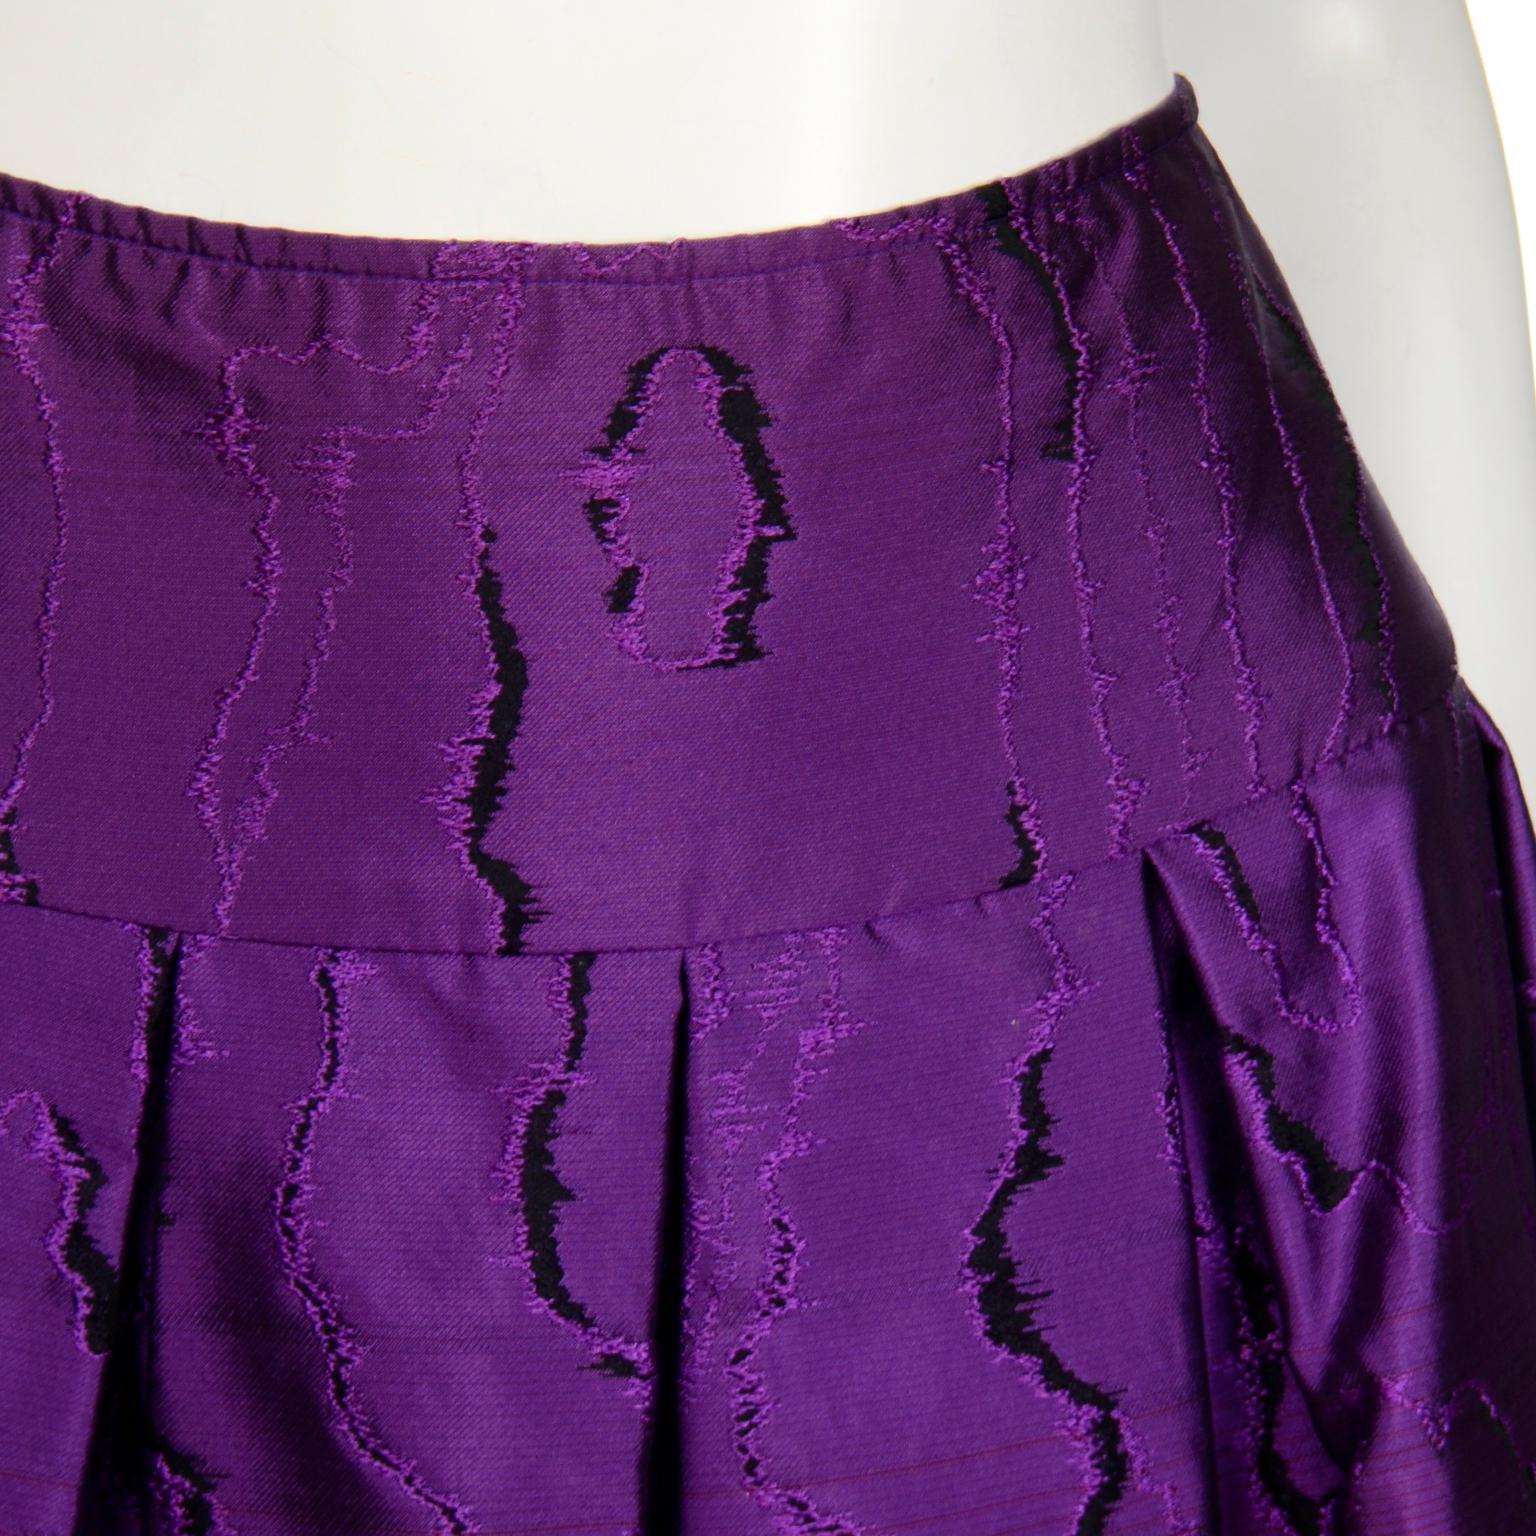 Oscar de la Renta Fall 2008 Purple Textured Skirt Runway Documented For Sale 4